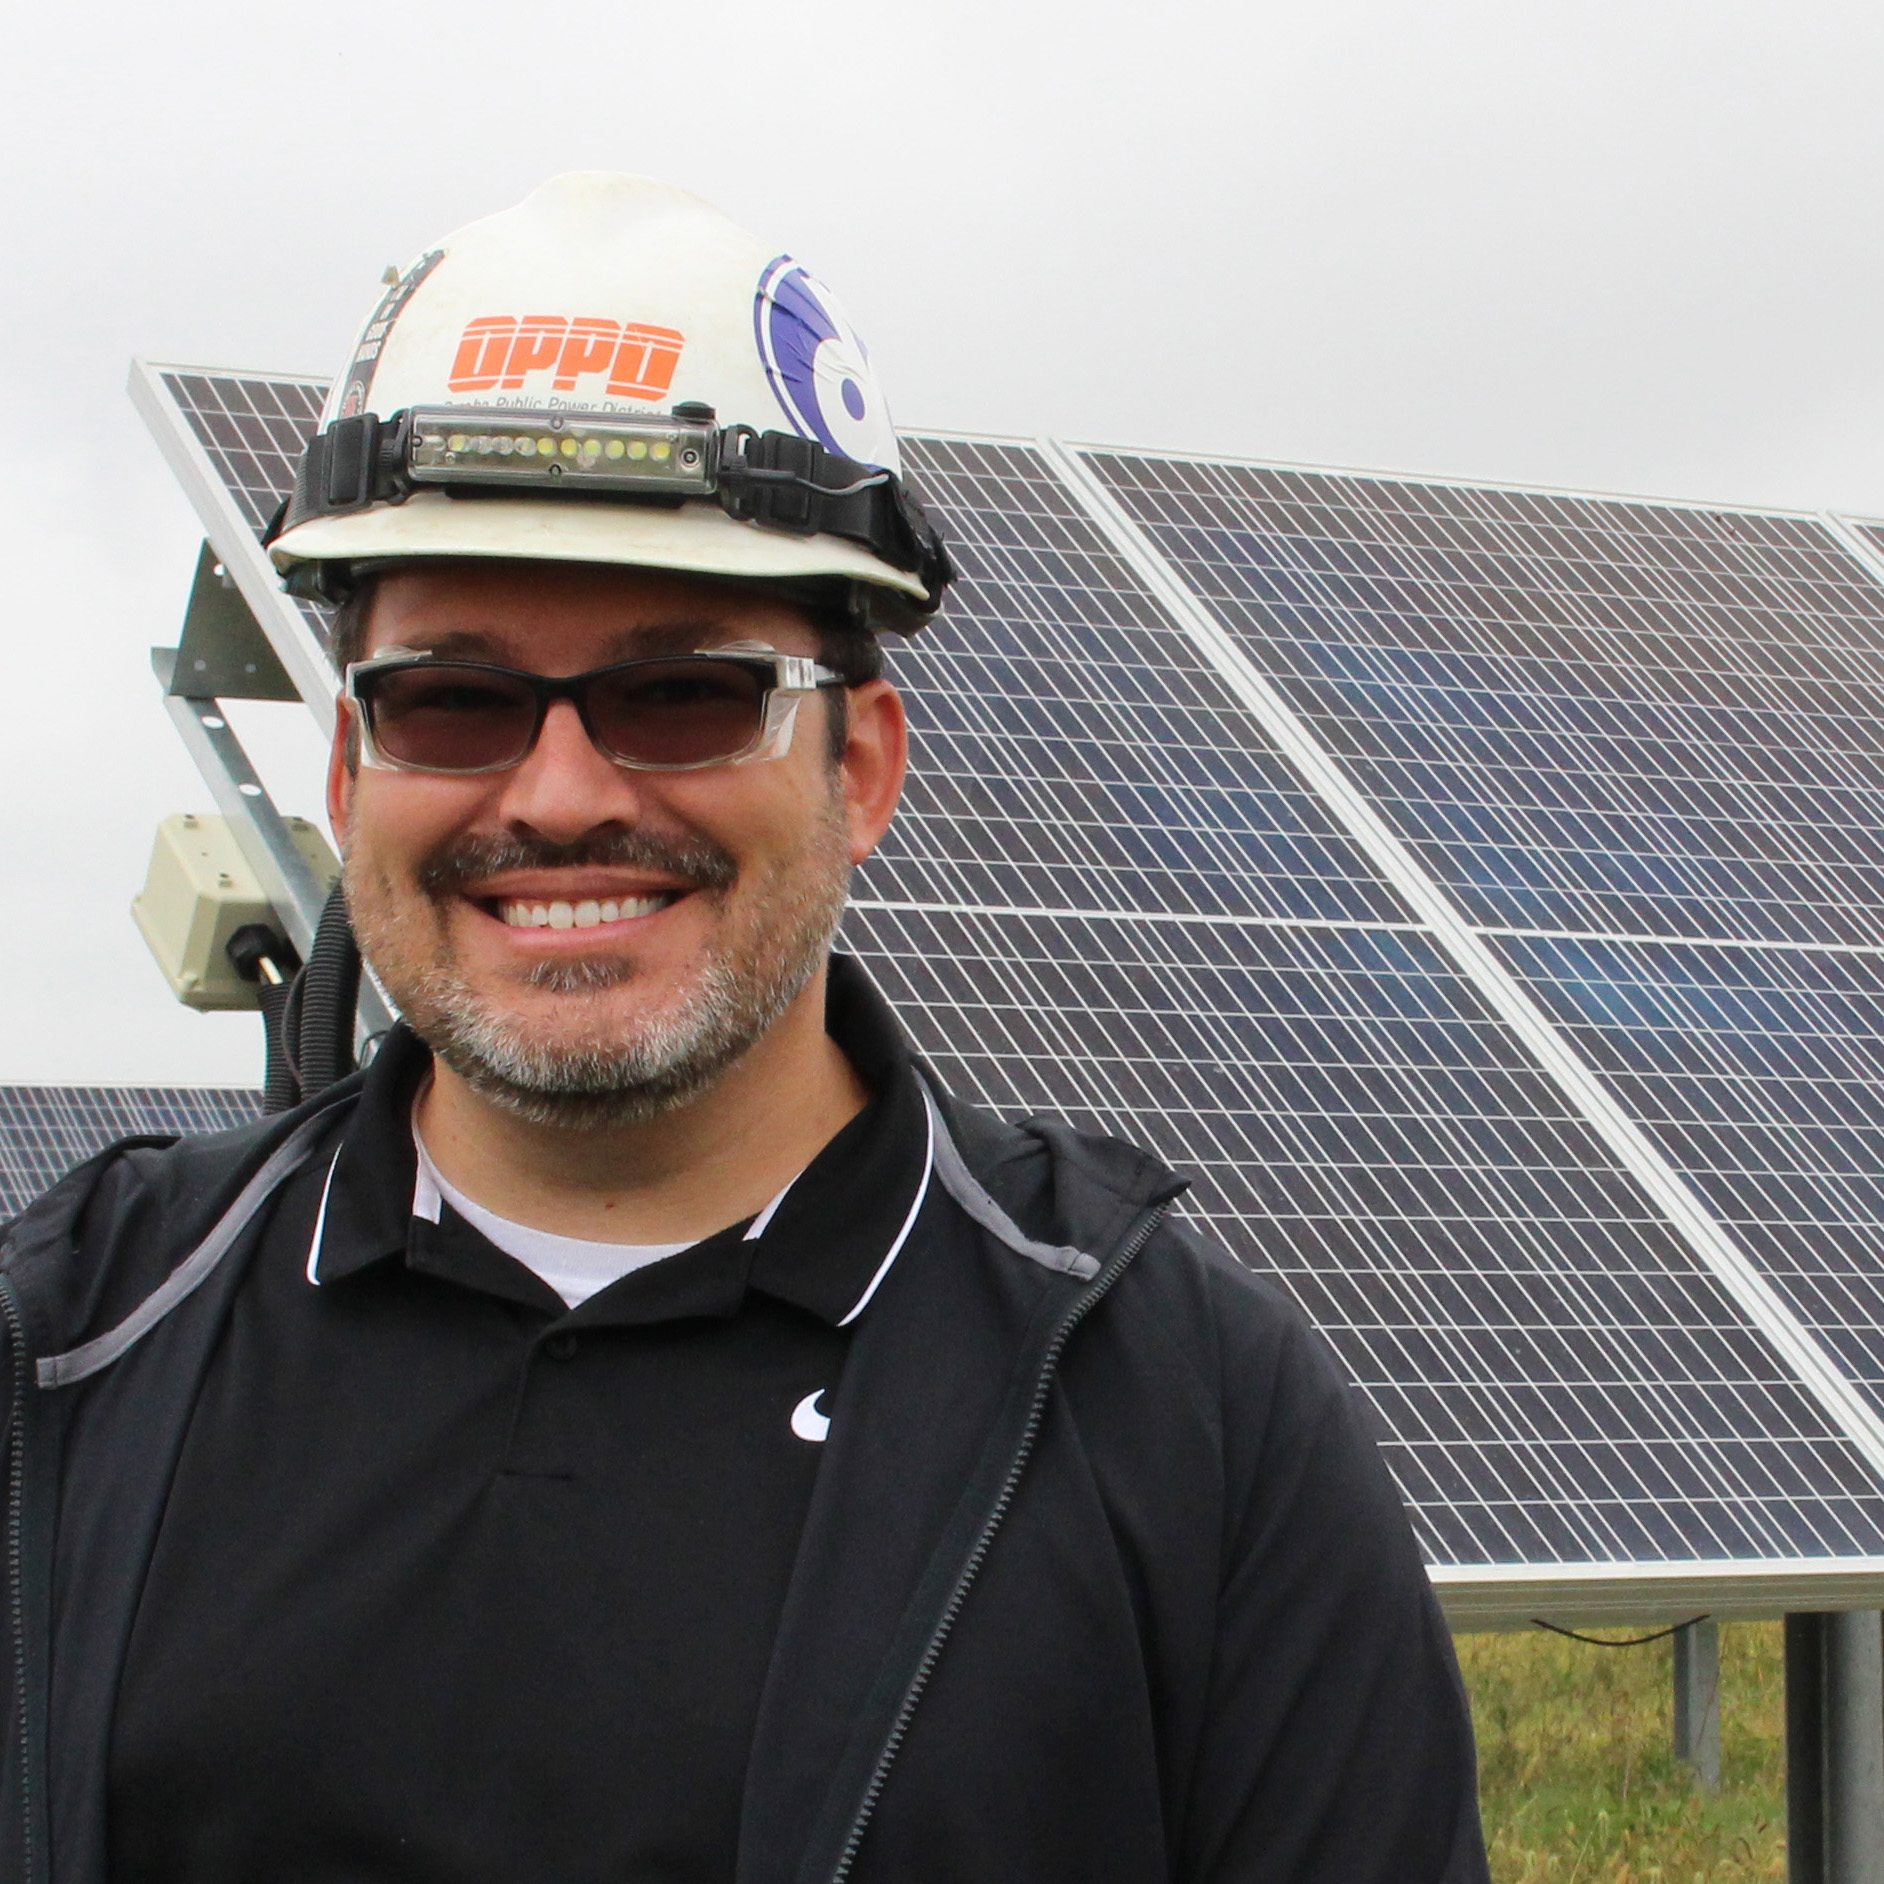 OPPD employee at community solar array